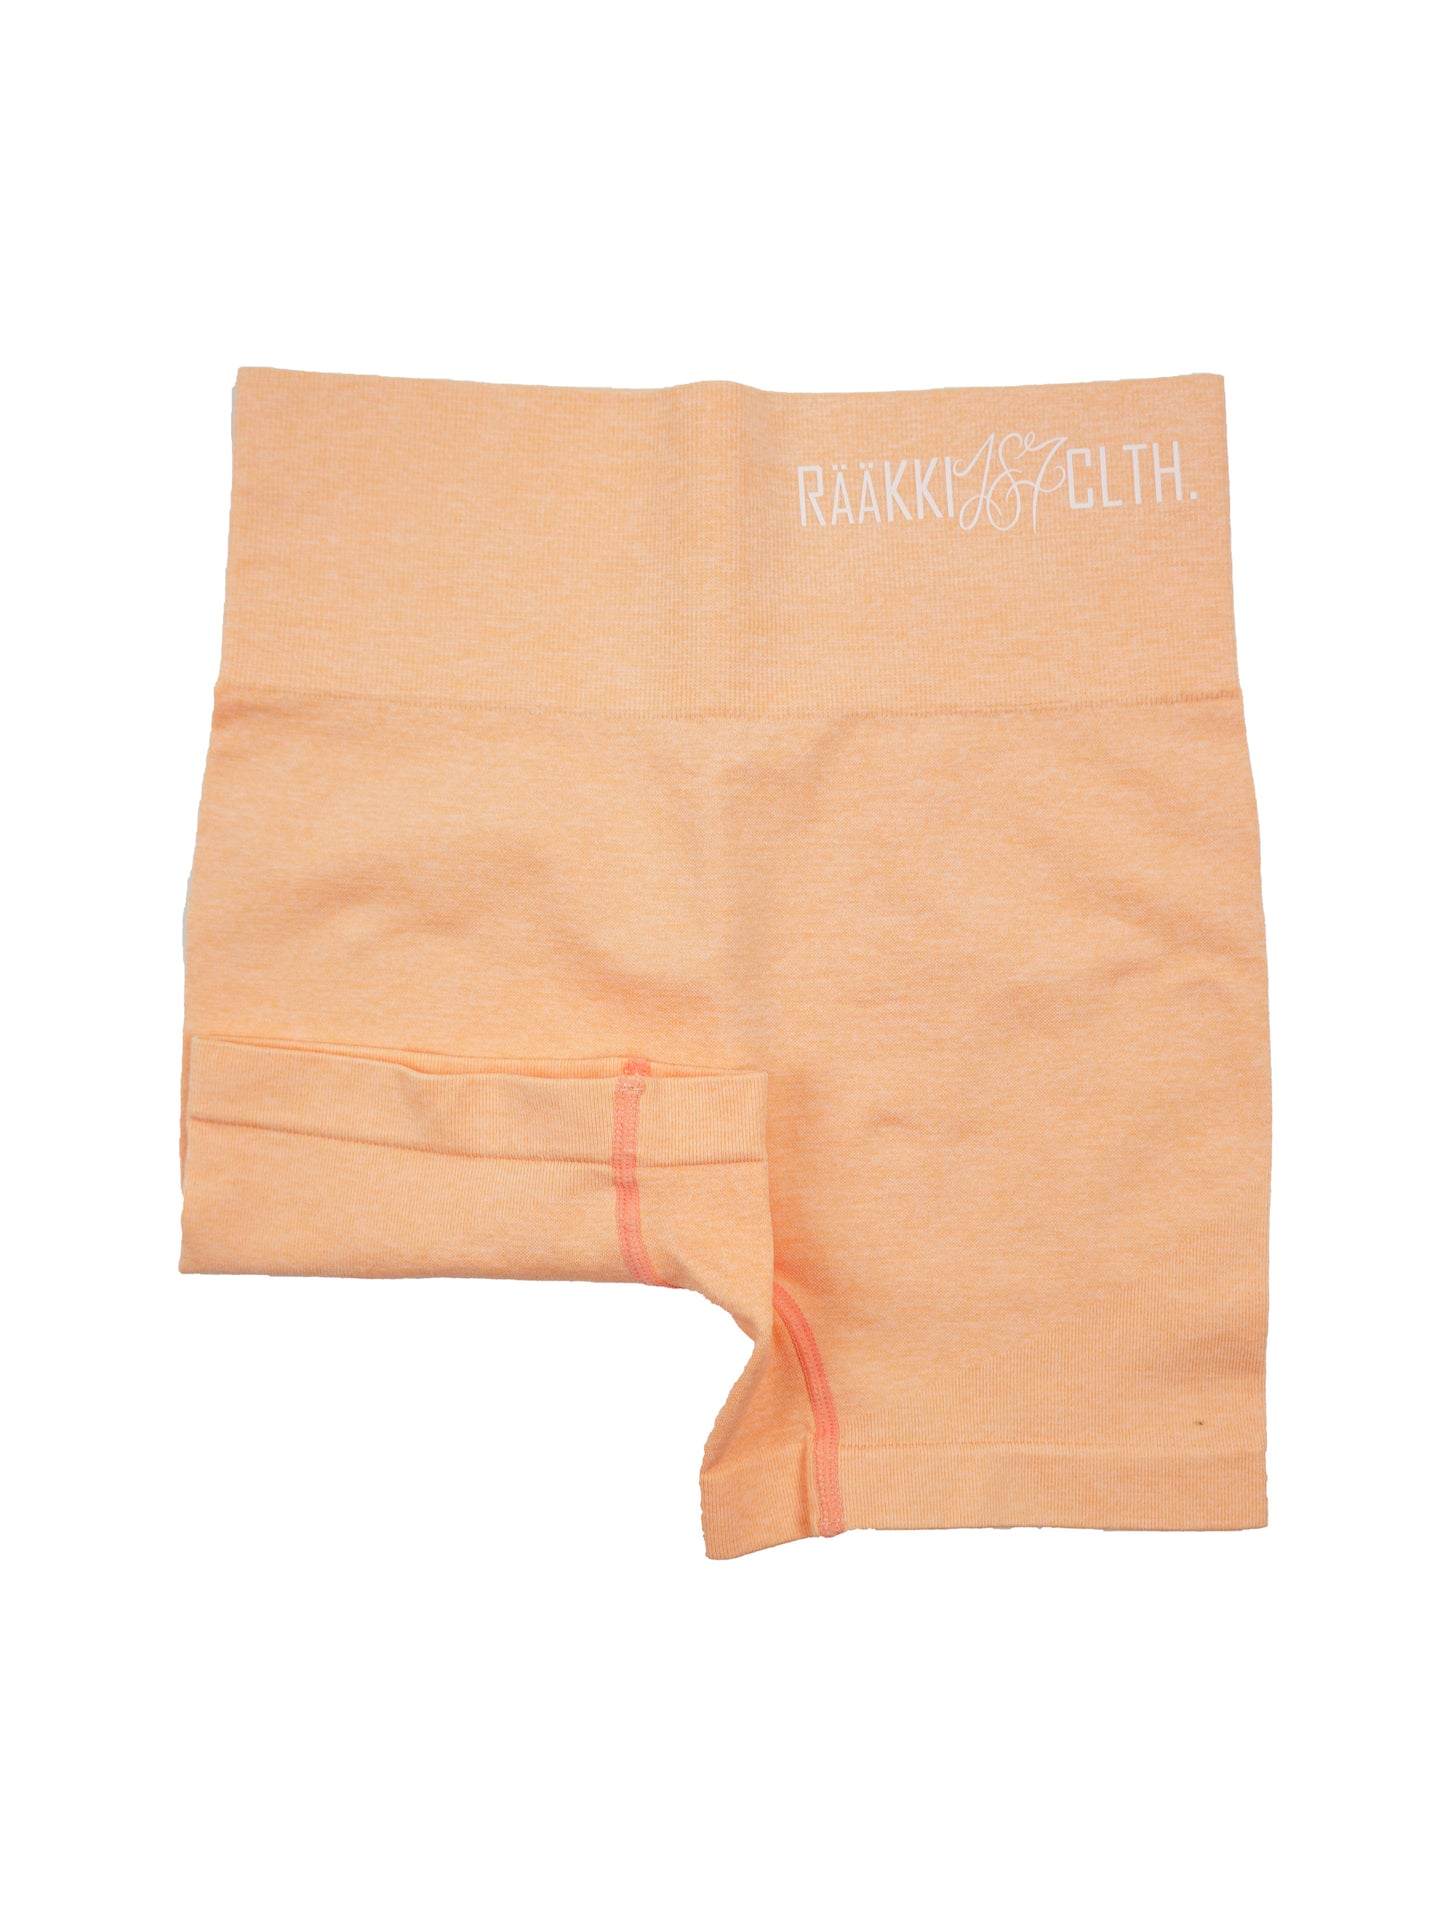 Simply Seamless Shorts - Sweet Peach